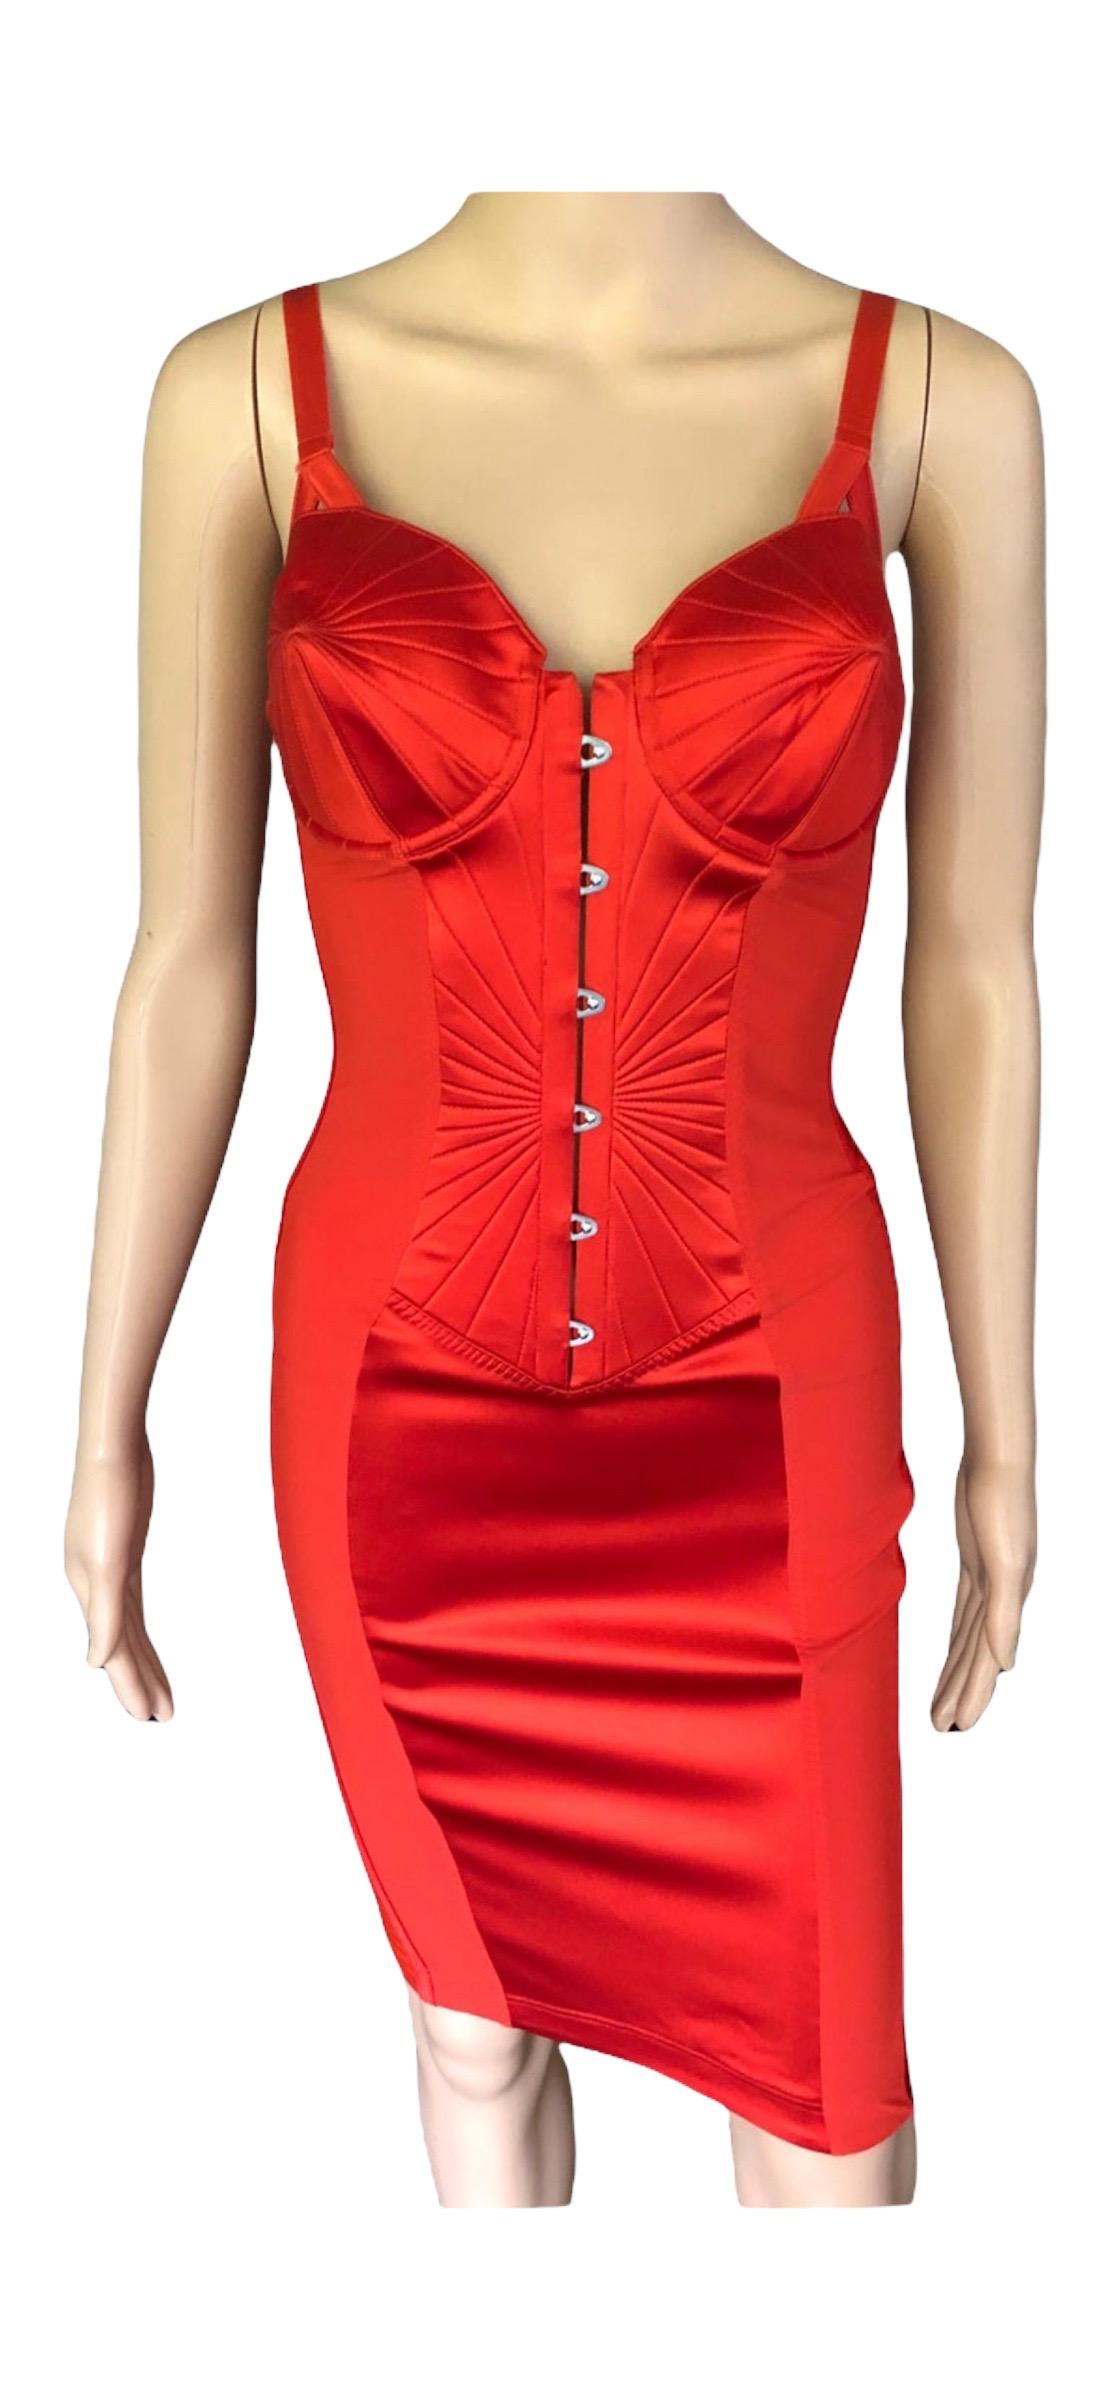 Jean Paul Gaultier for La Perla c. 2010 Cone Bra Corset Bondage Red Dress For Sale 4